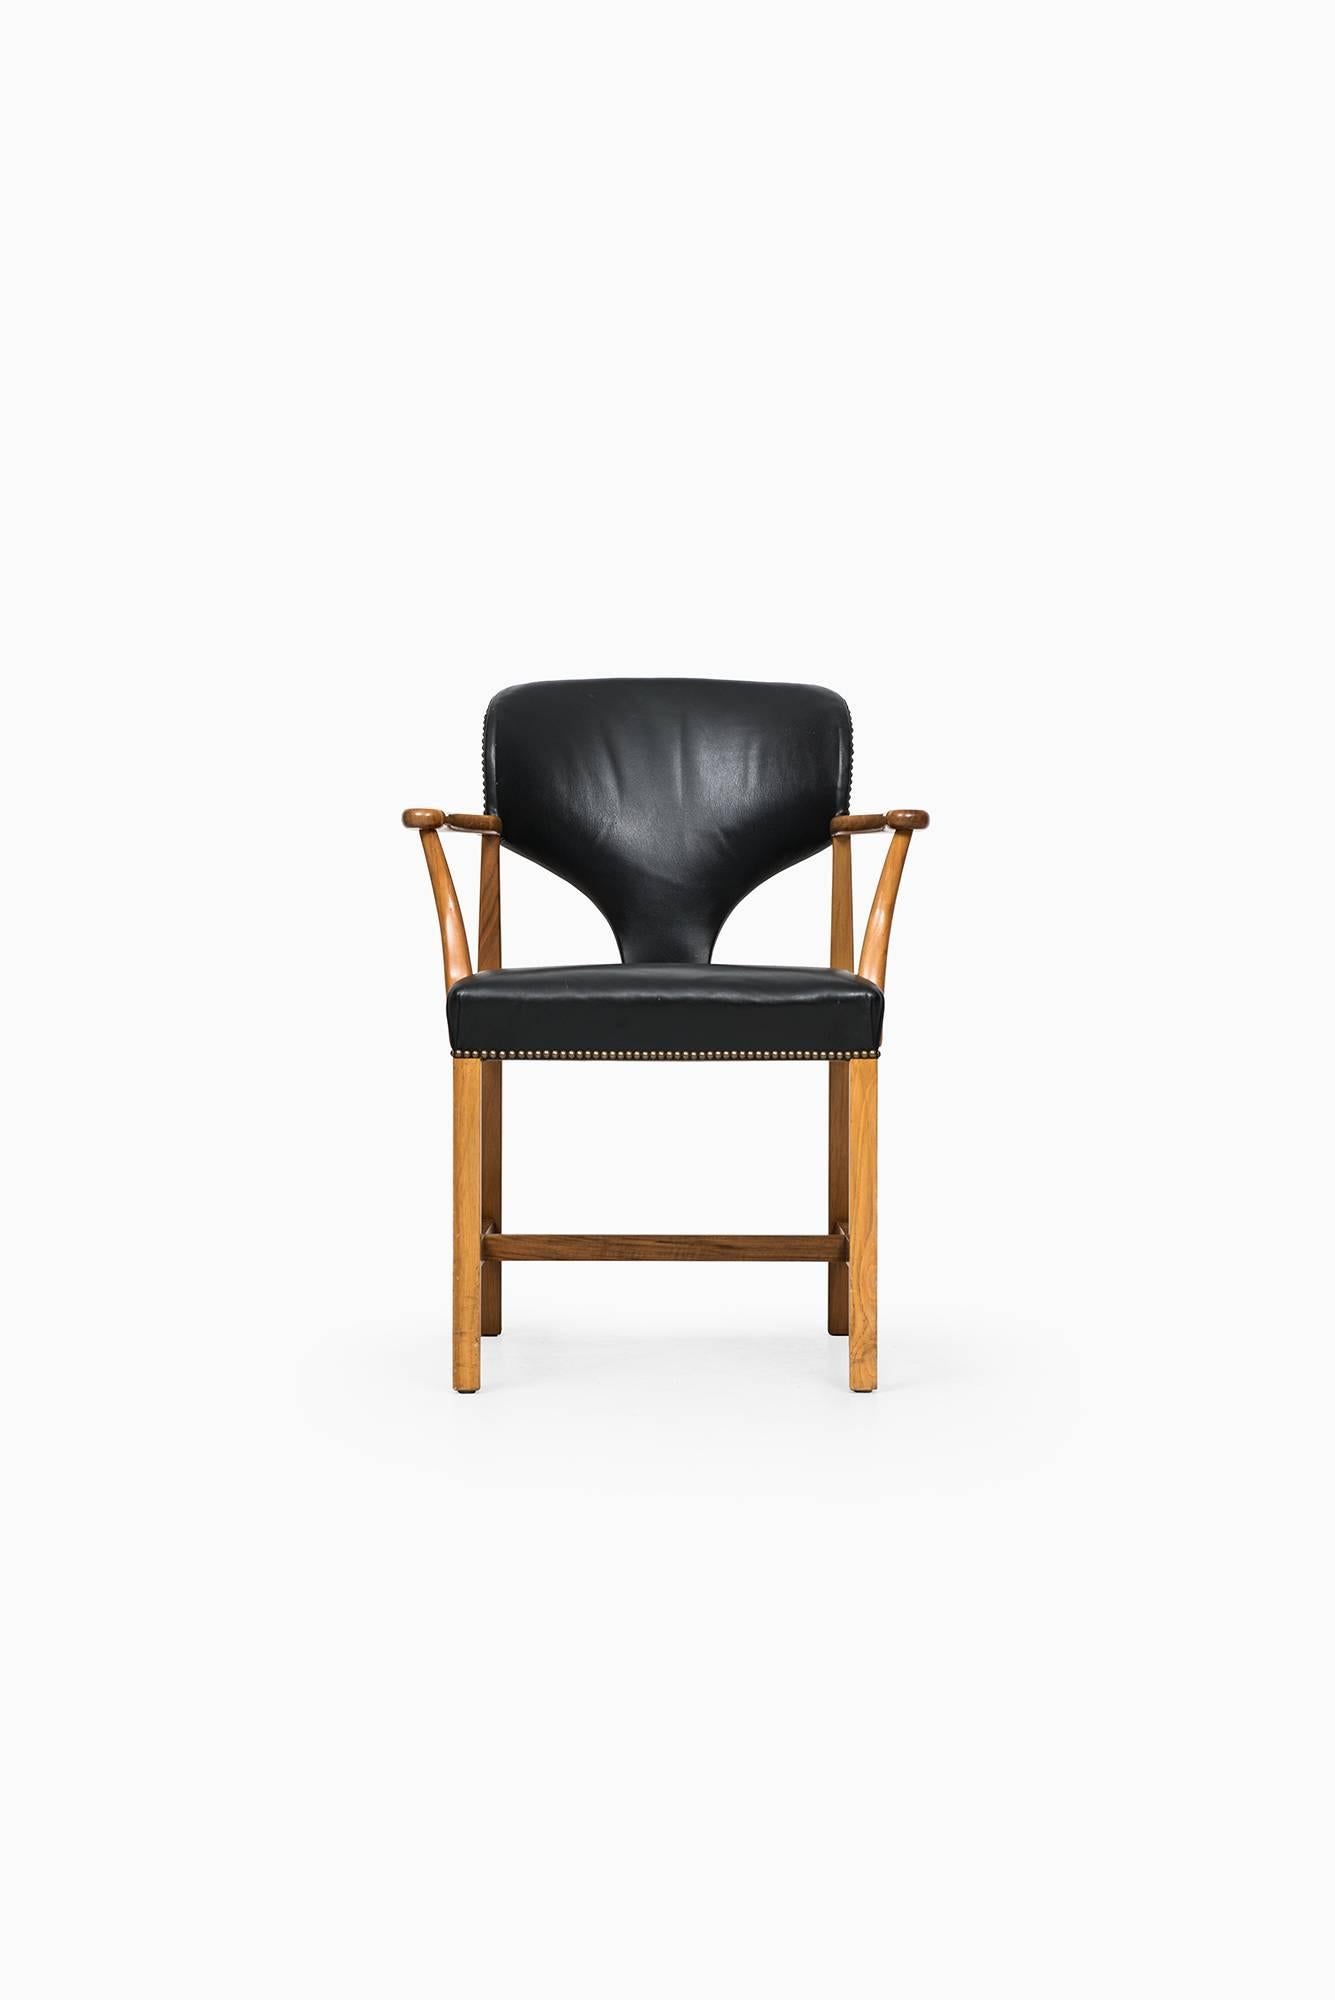 Rare armchair designed by Josef Frank. Produced by Svenskt Tenn in Sweden.